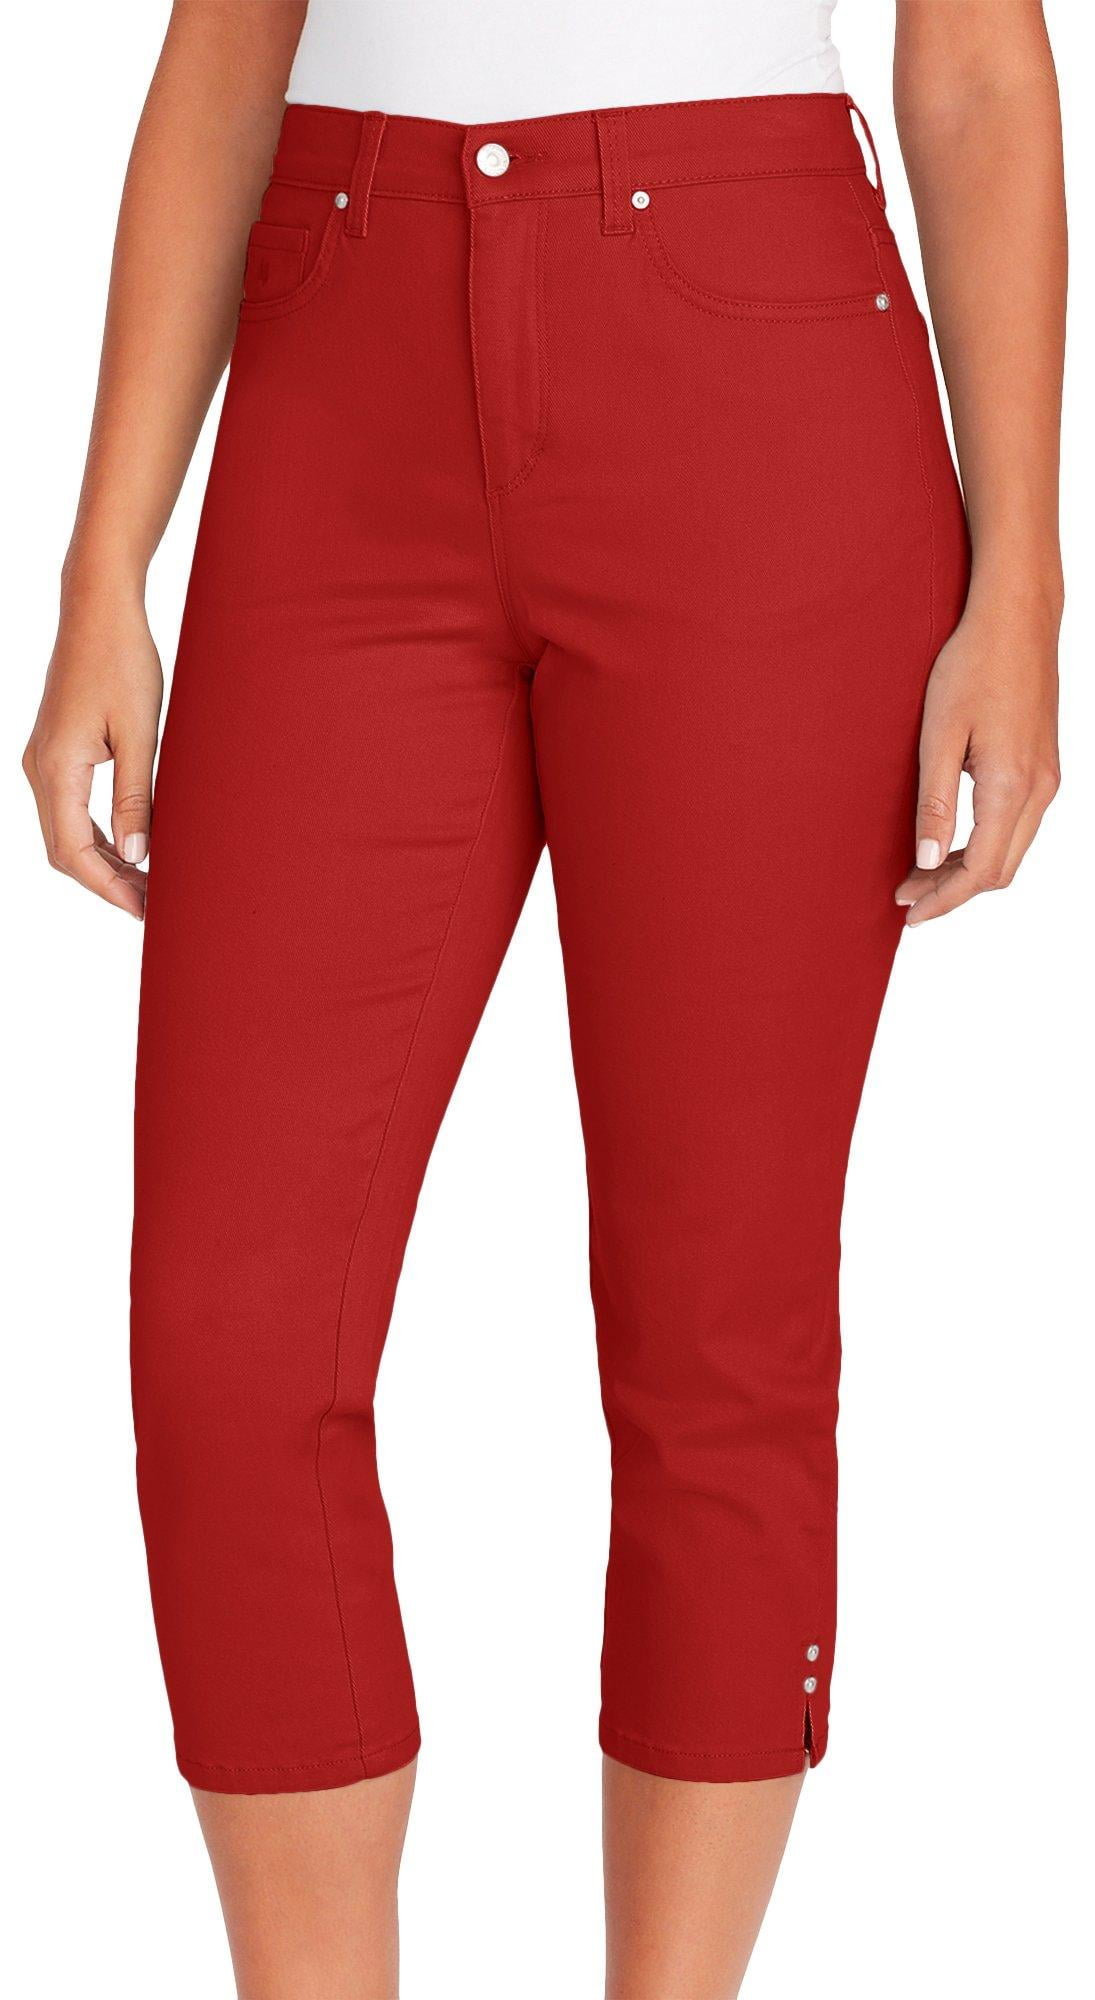 gloria vanderbilt red jeans